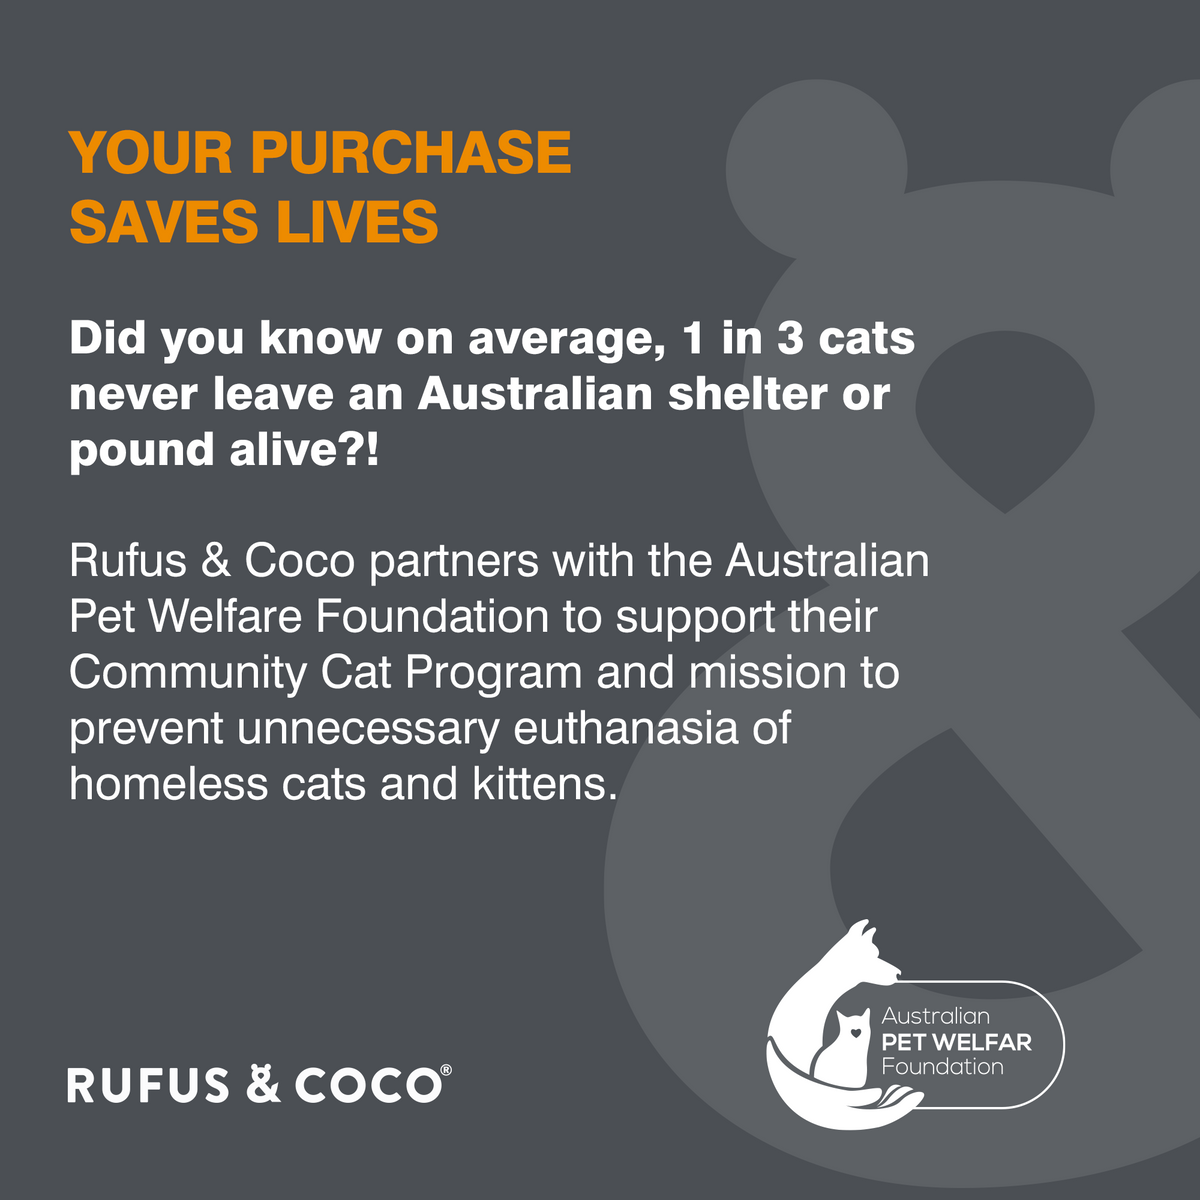 Zero Odour Natural Litter 2kg - Rufus & Coco Australia